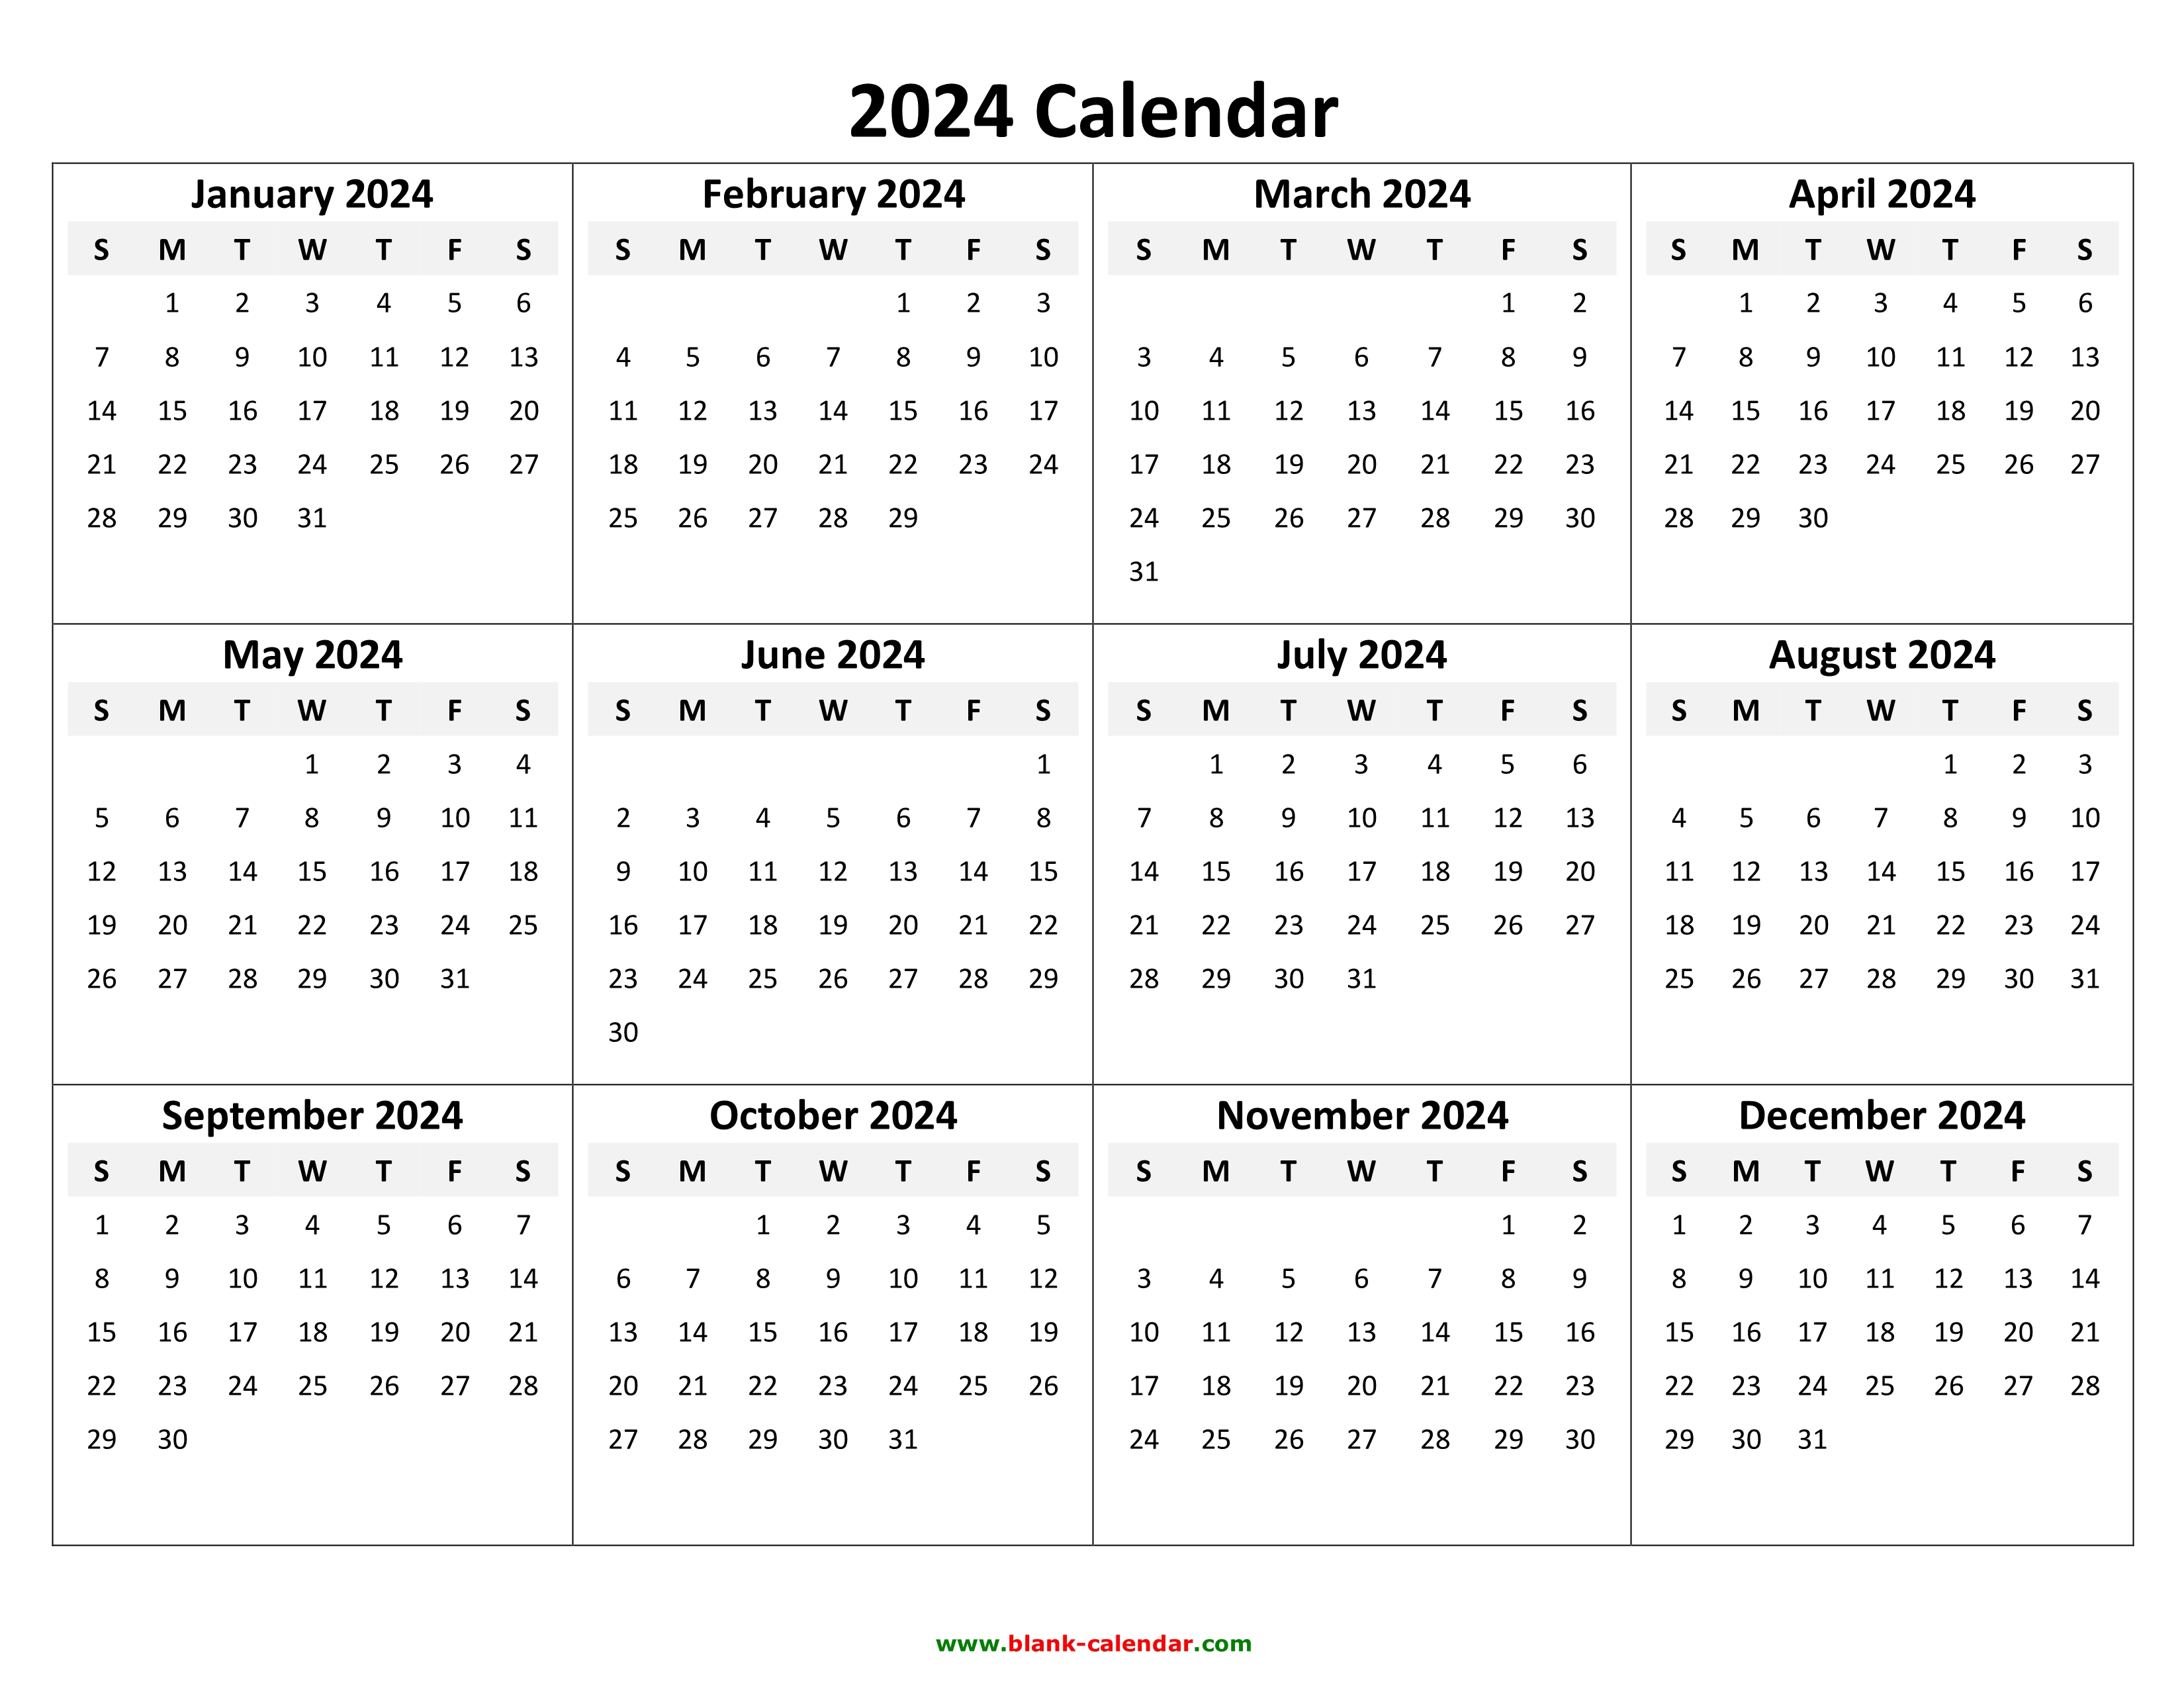 calendar-2023-with-holidays-uk-get-latest-news-2023-update